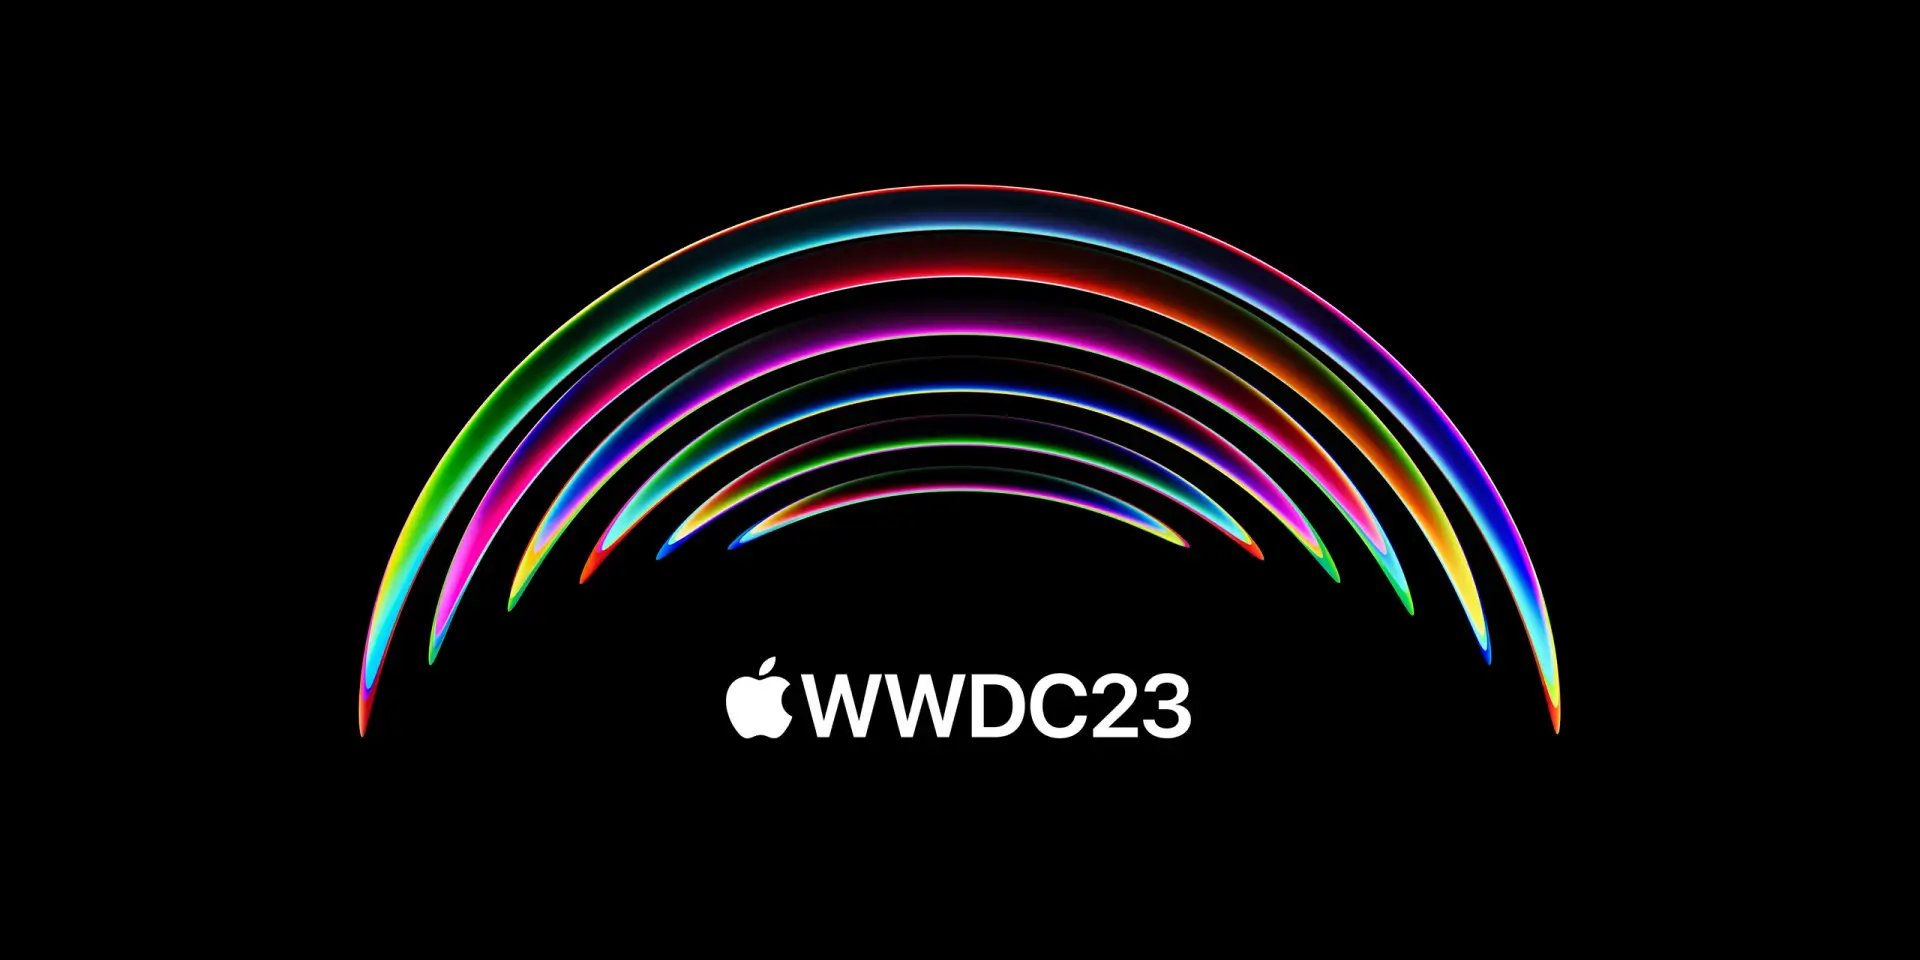 Design Videos: WWDC23